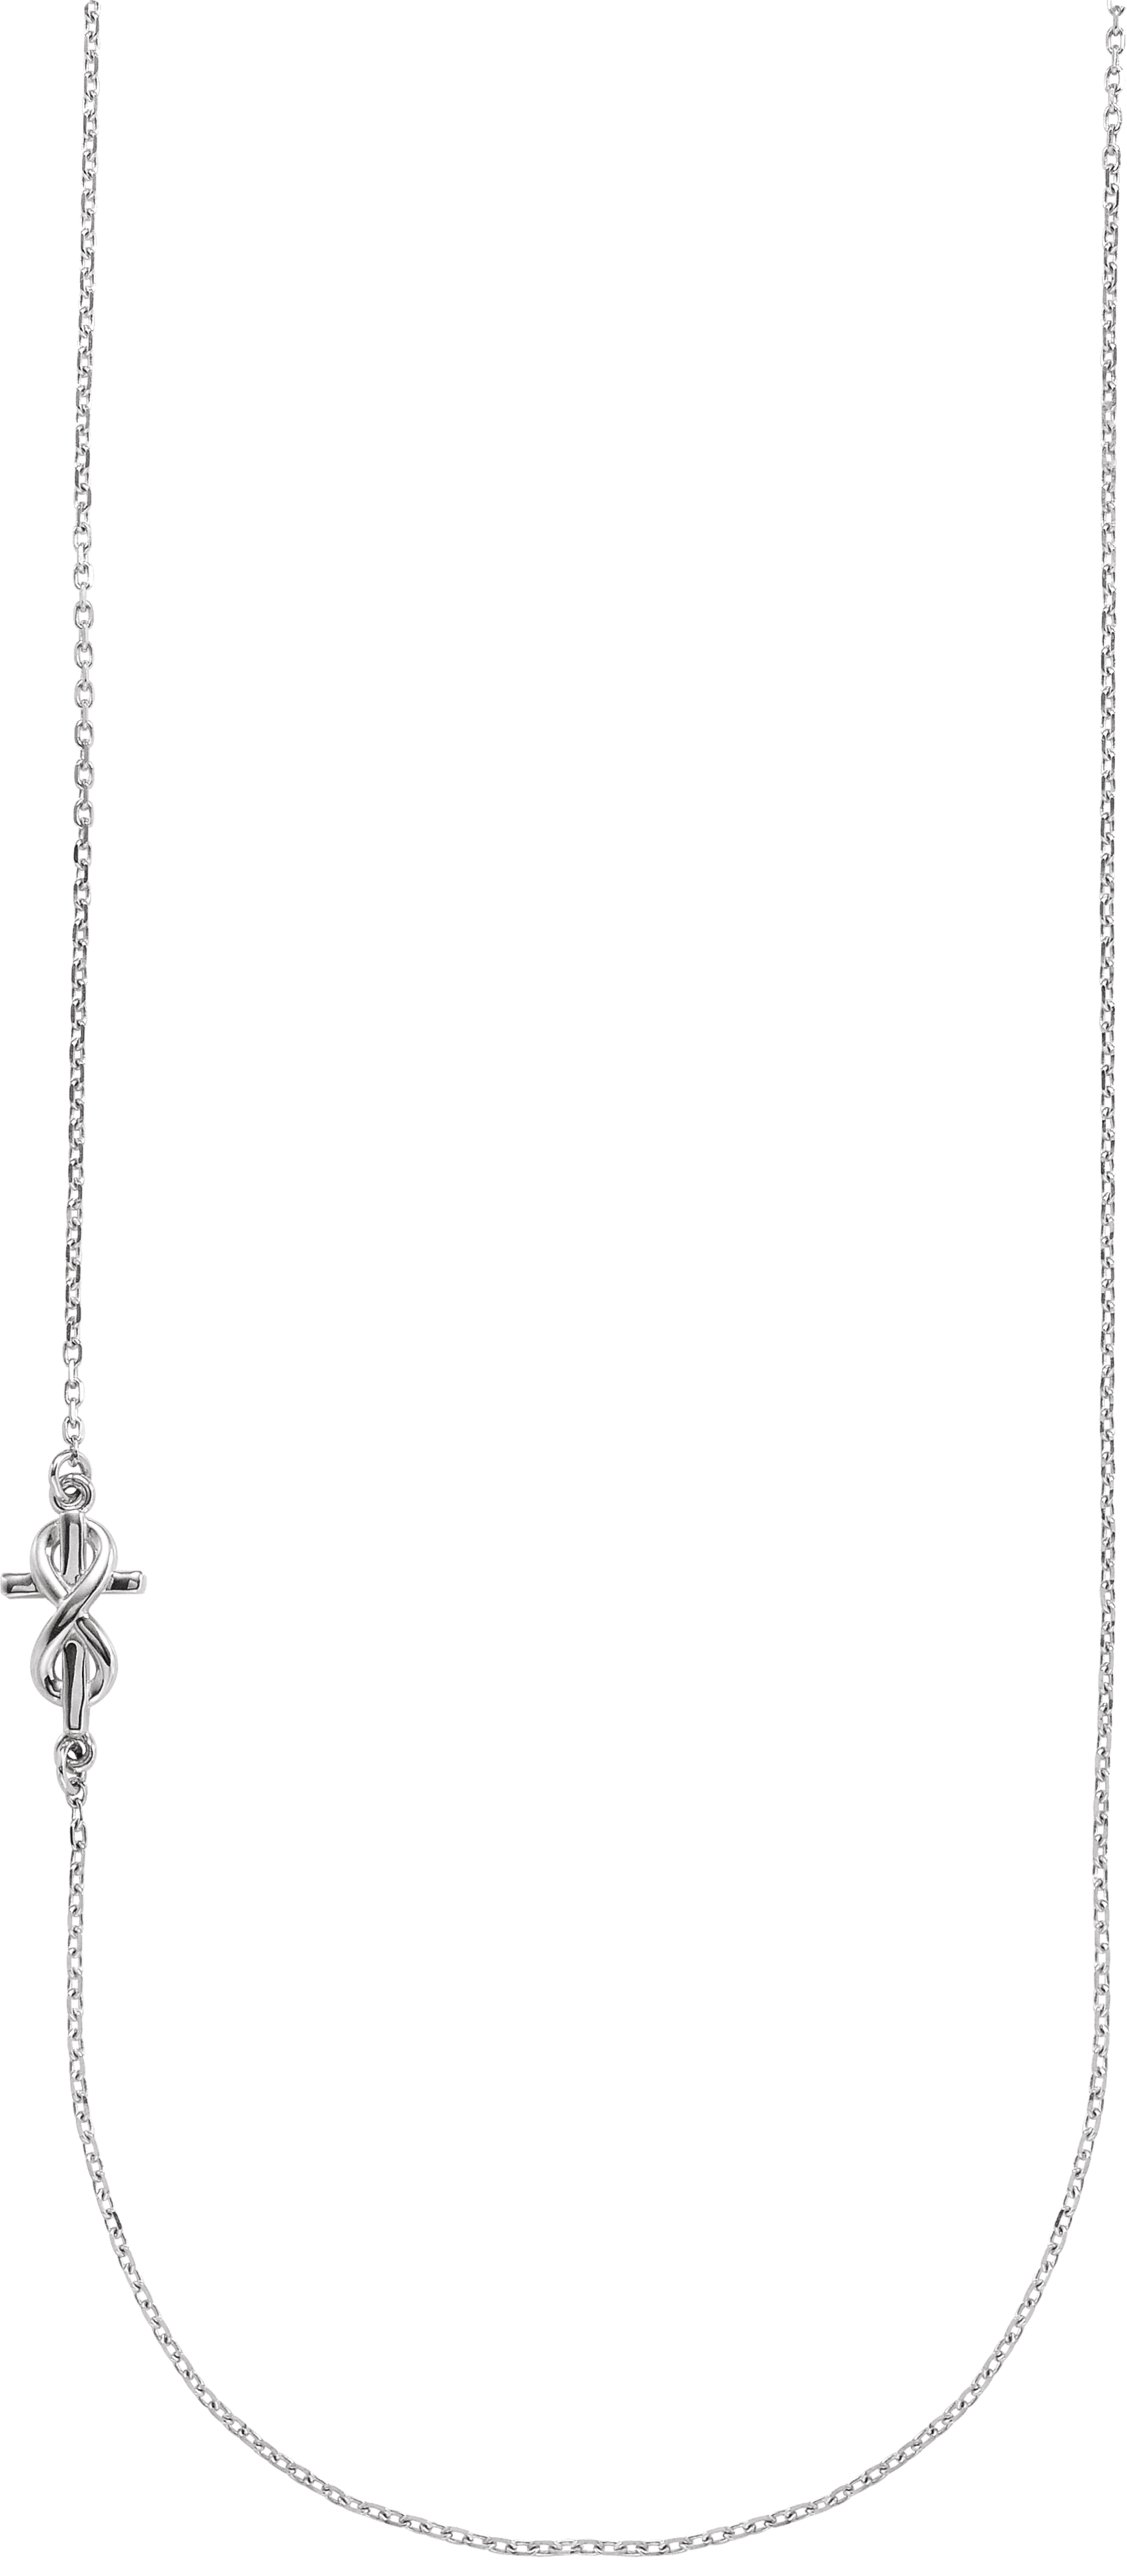 14K White Infinity Inspired Off Center Sideways Cross 16 inch Necklace Ref. 13443084